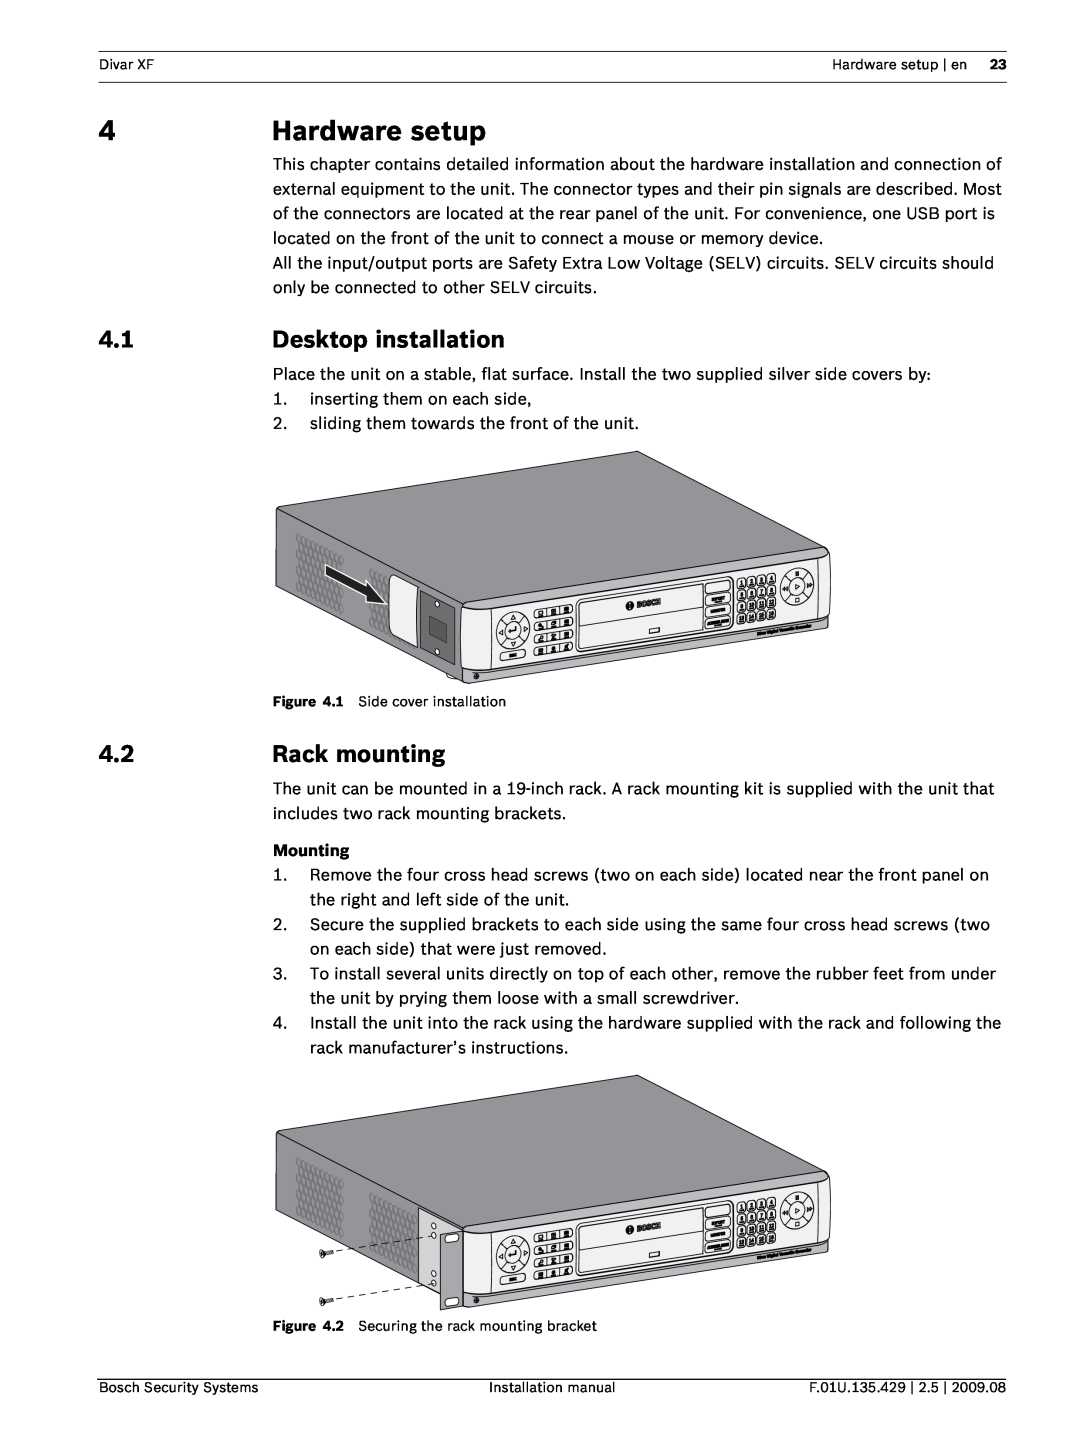 Bosch Appliances XF installation manual Hardware setup, Desktop installation, Rack mounting, Mounting 